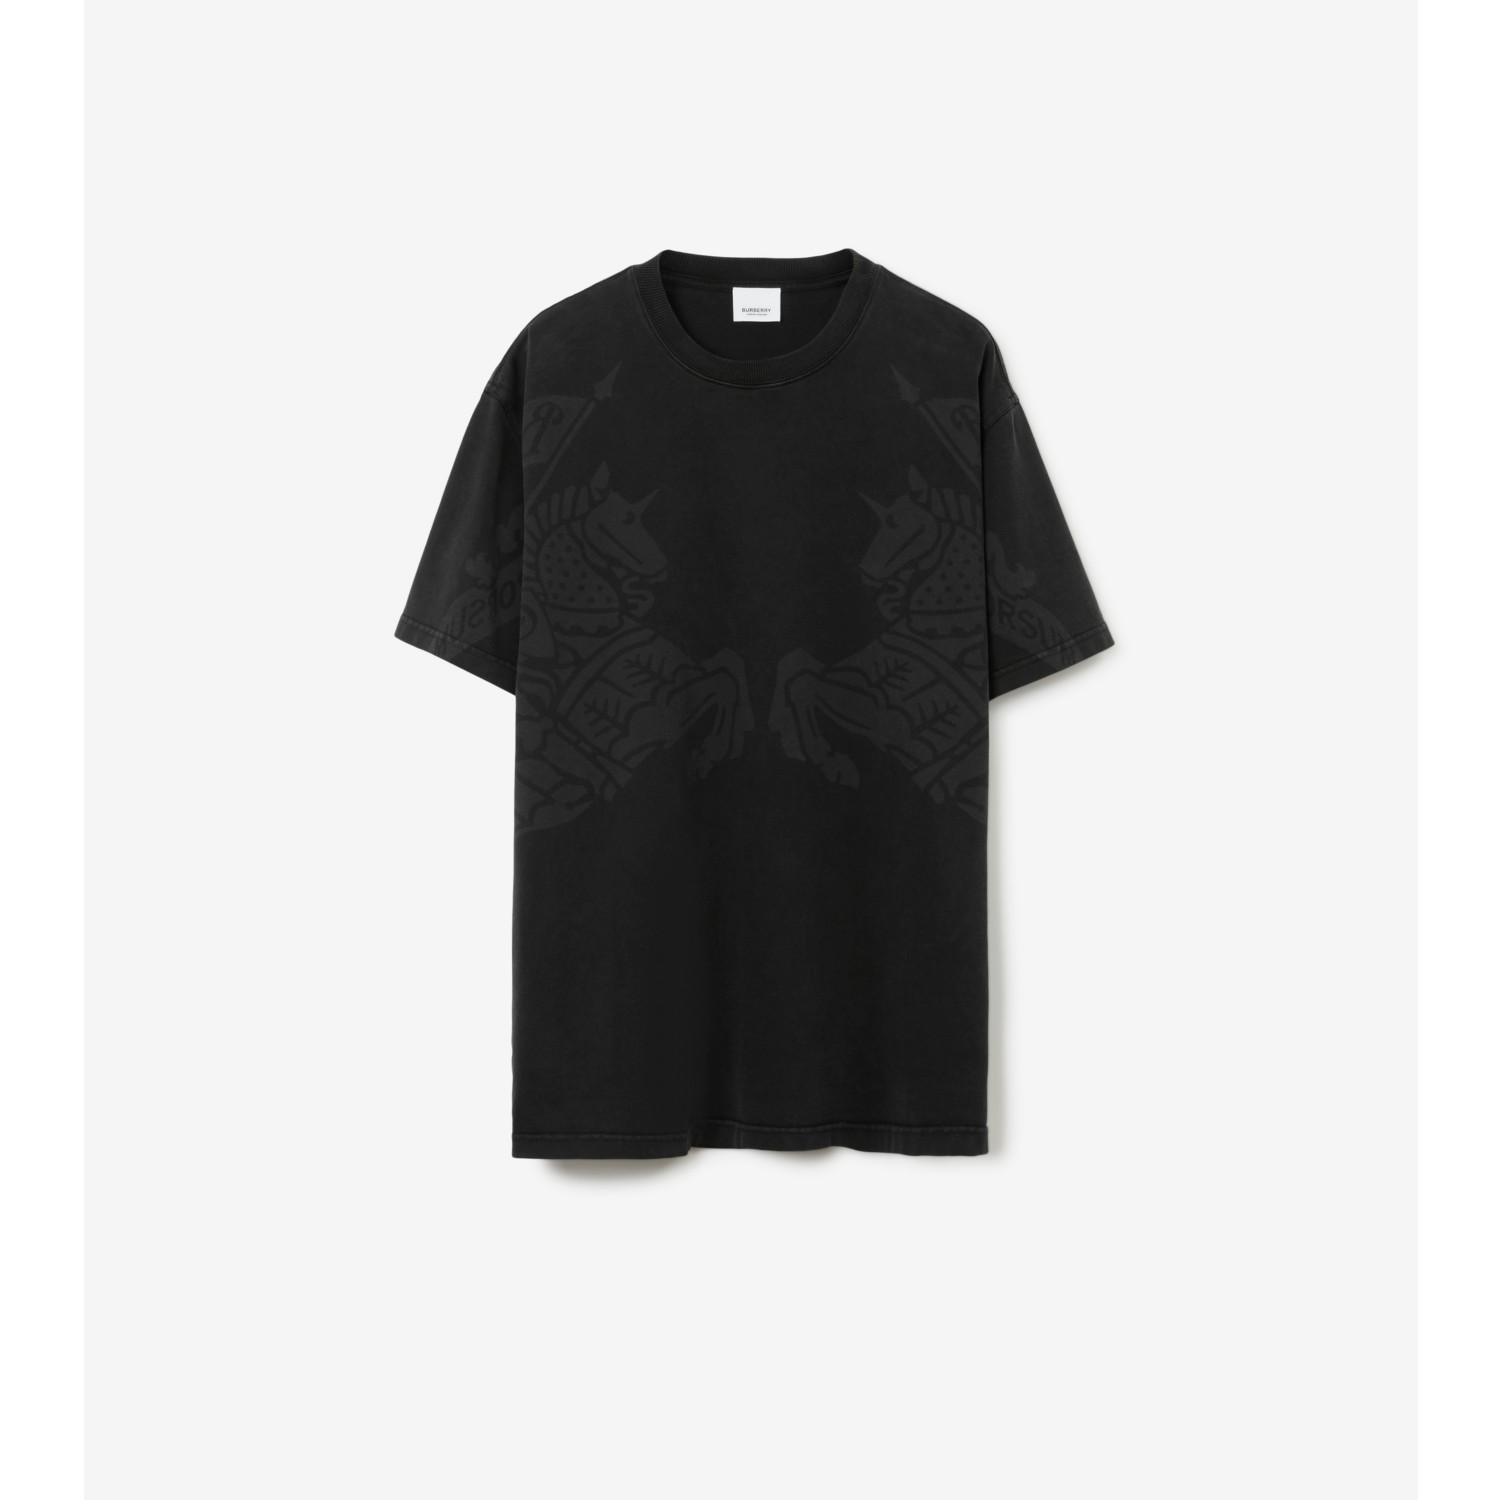 Burberry Women's Carrick T-Shirt - Black - T-shirts